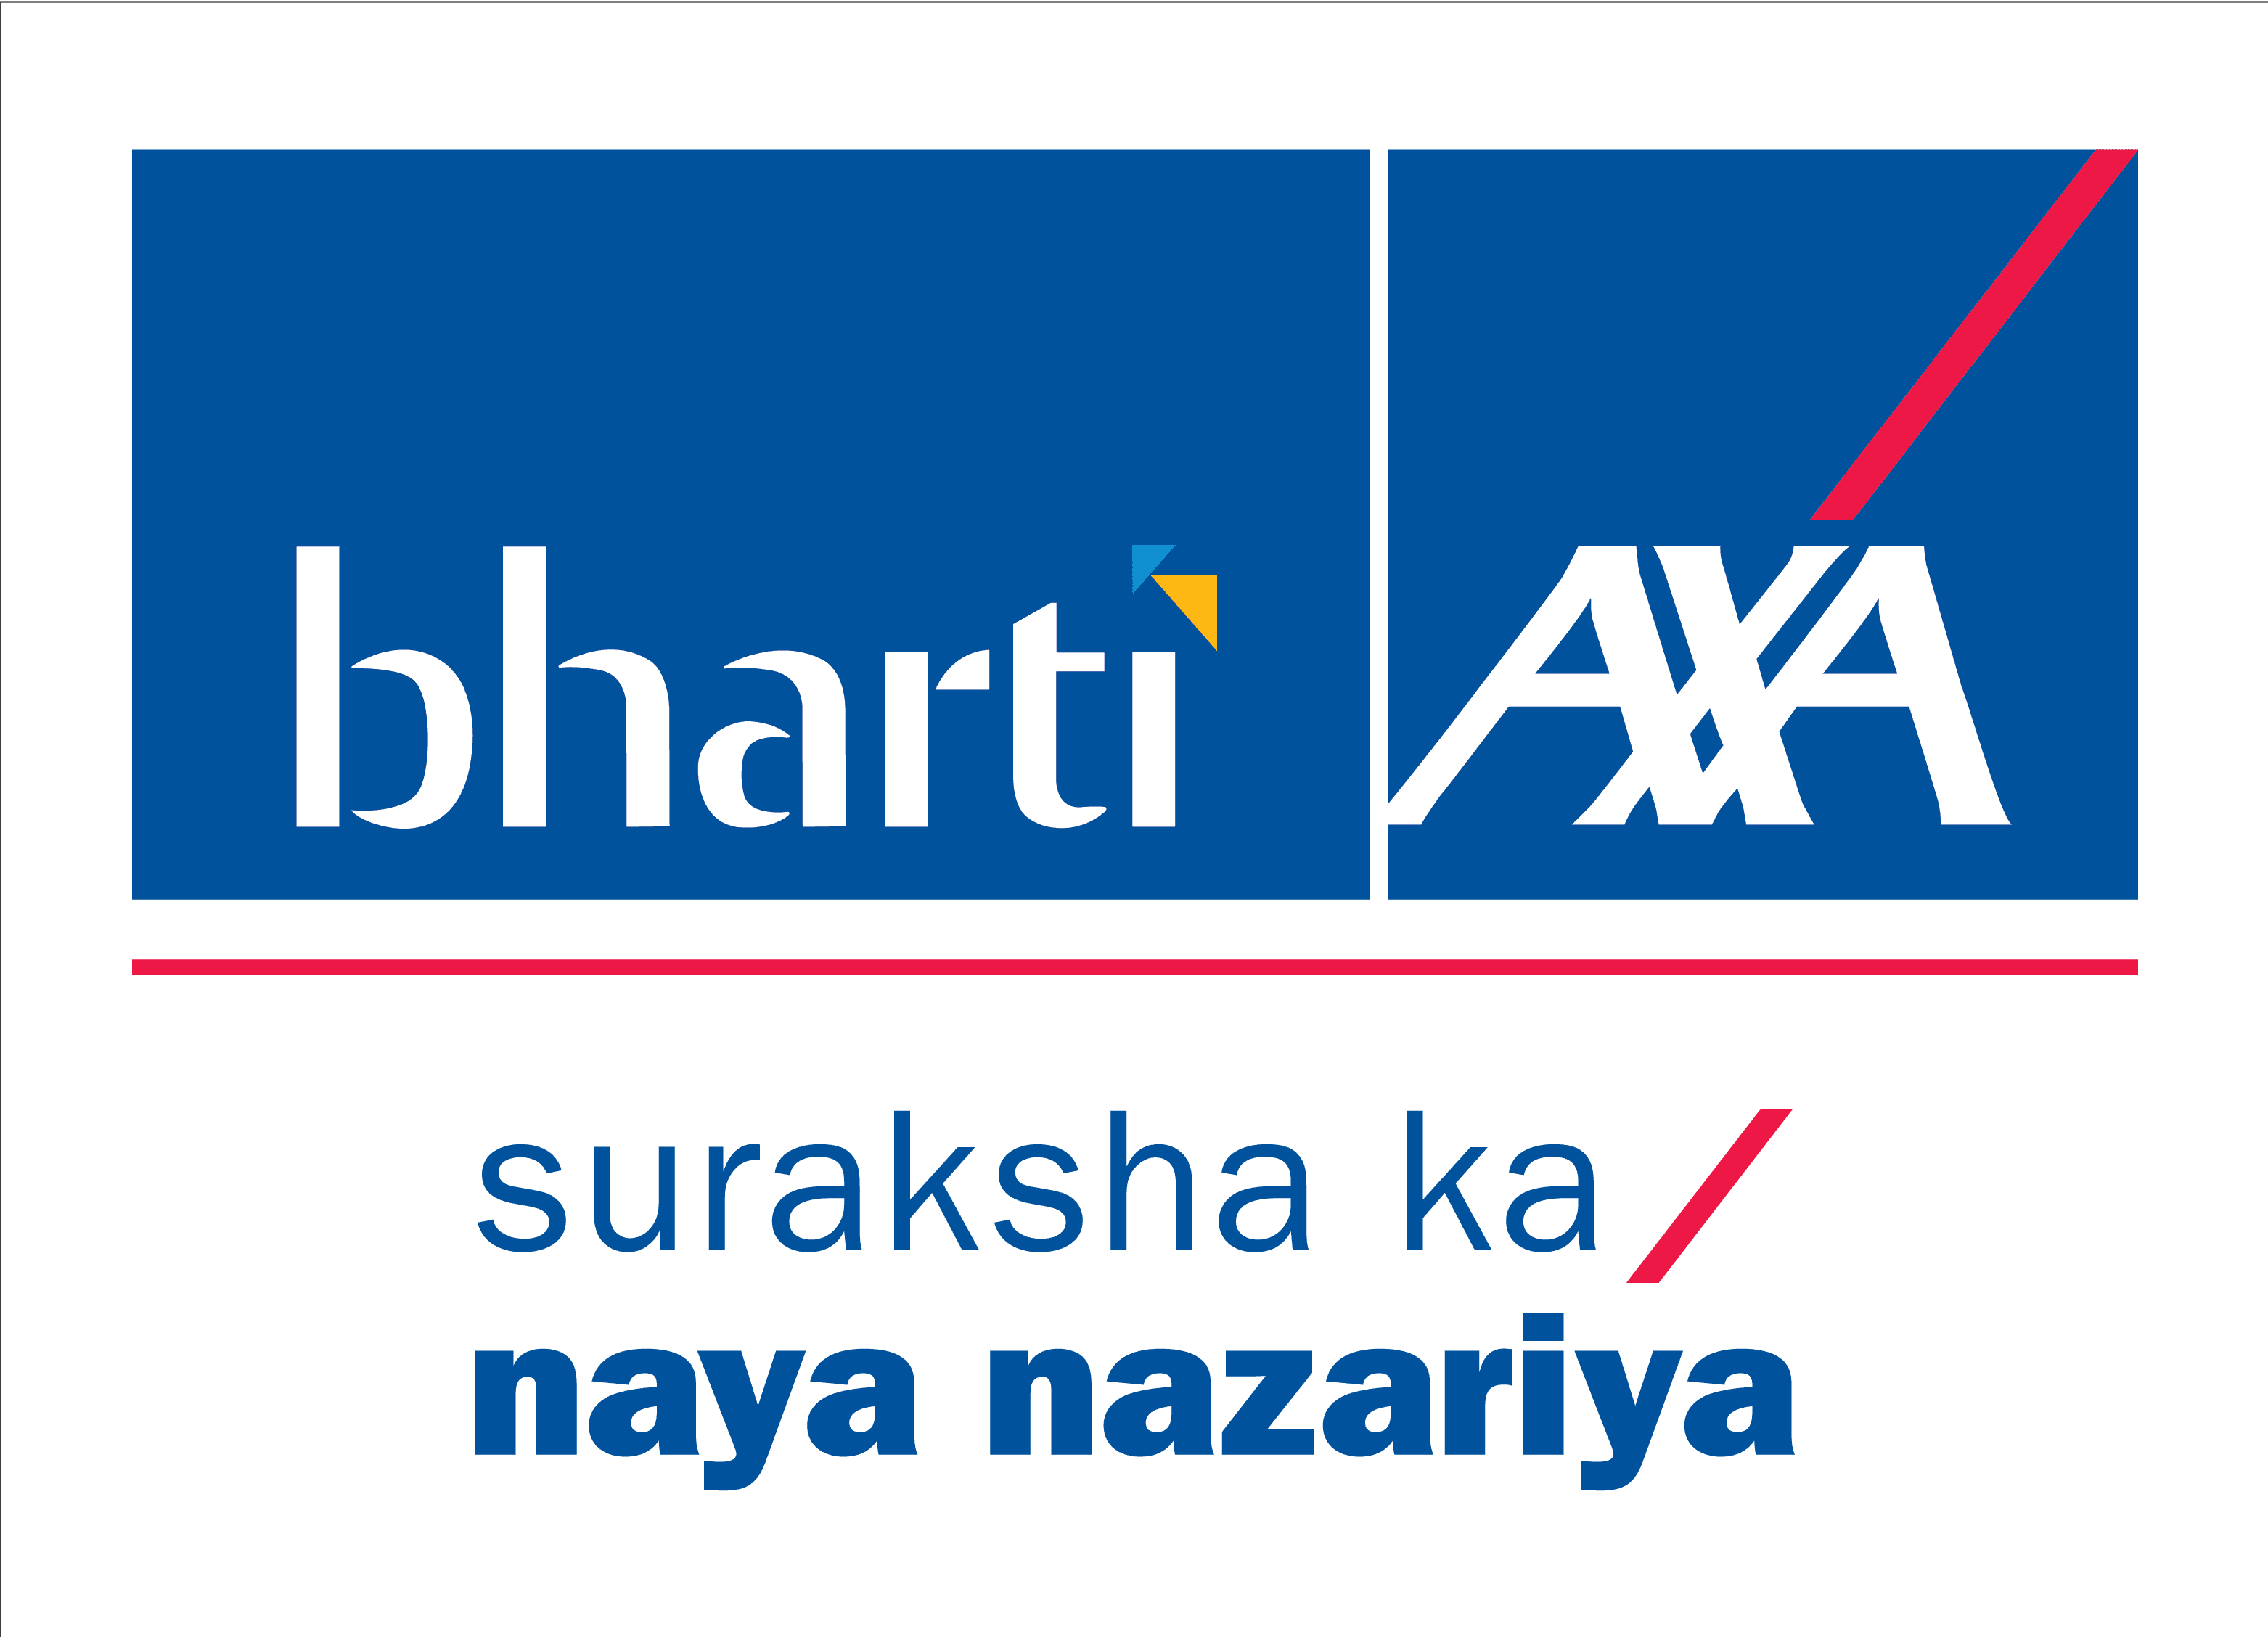 Bharati_AXA_Travel_Insurance_Company_in_India_TravellersofIndia